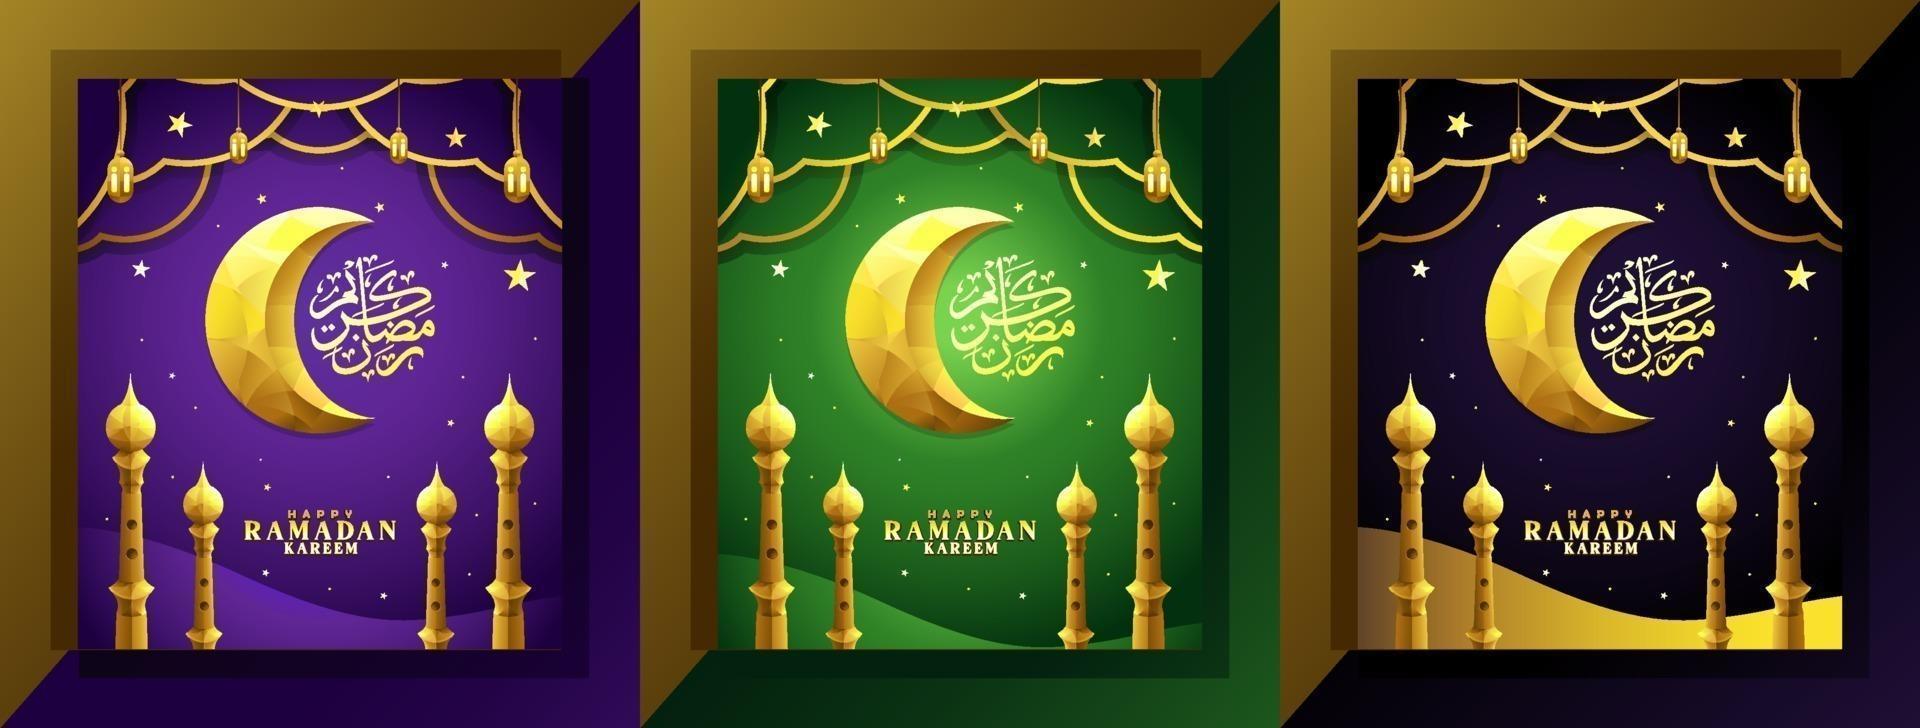 Ramadan Kareem-Poster vektor